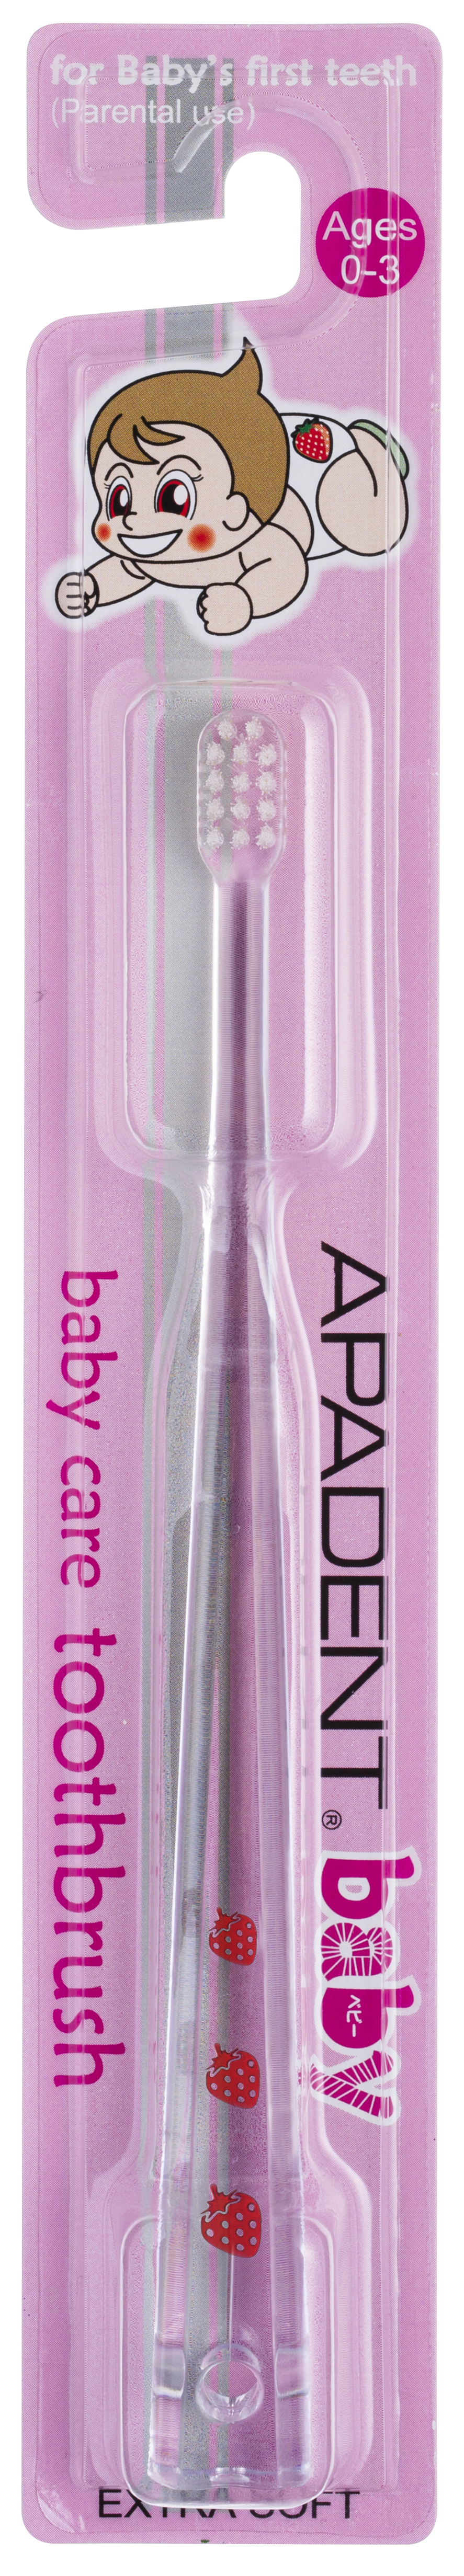 APADENT® BABY CARE Toothbrush